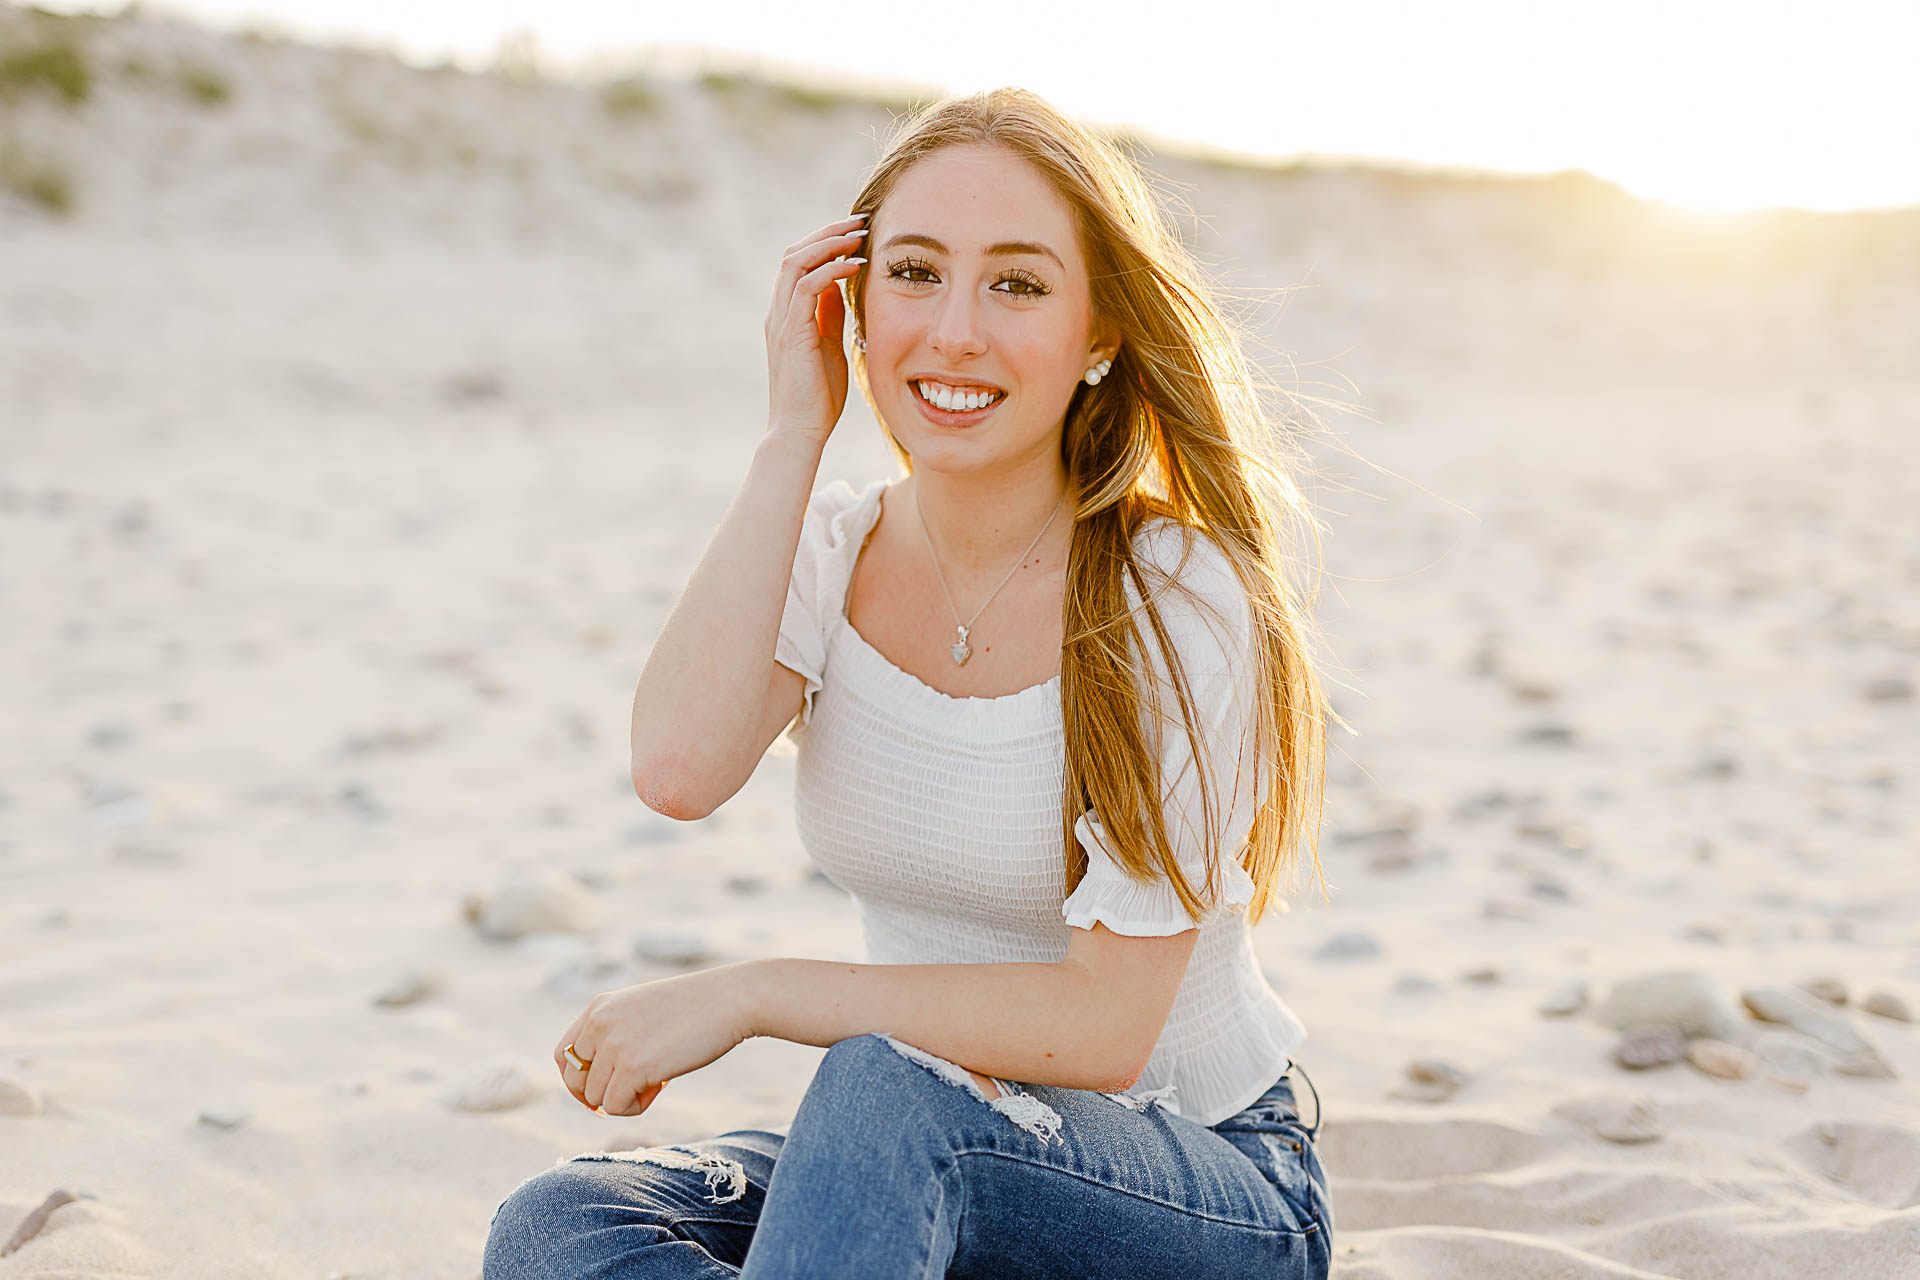 Photo by Arlington senior portrait photographer Christina Runnals | Girl sitting in the sand